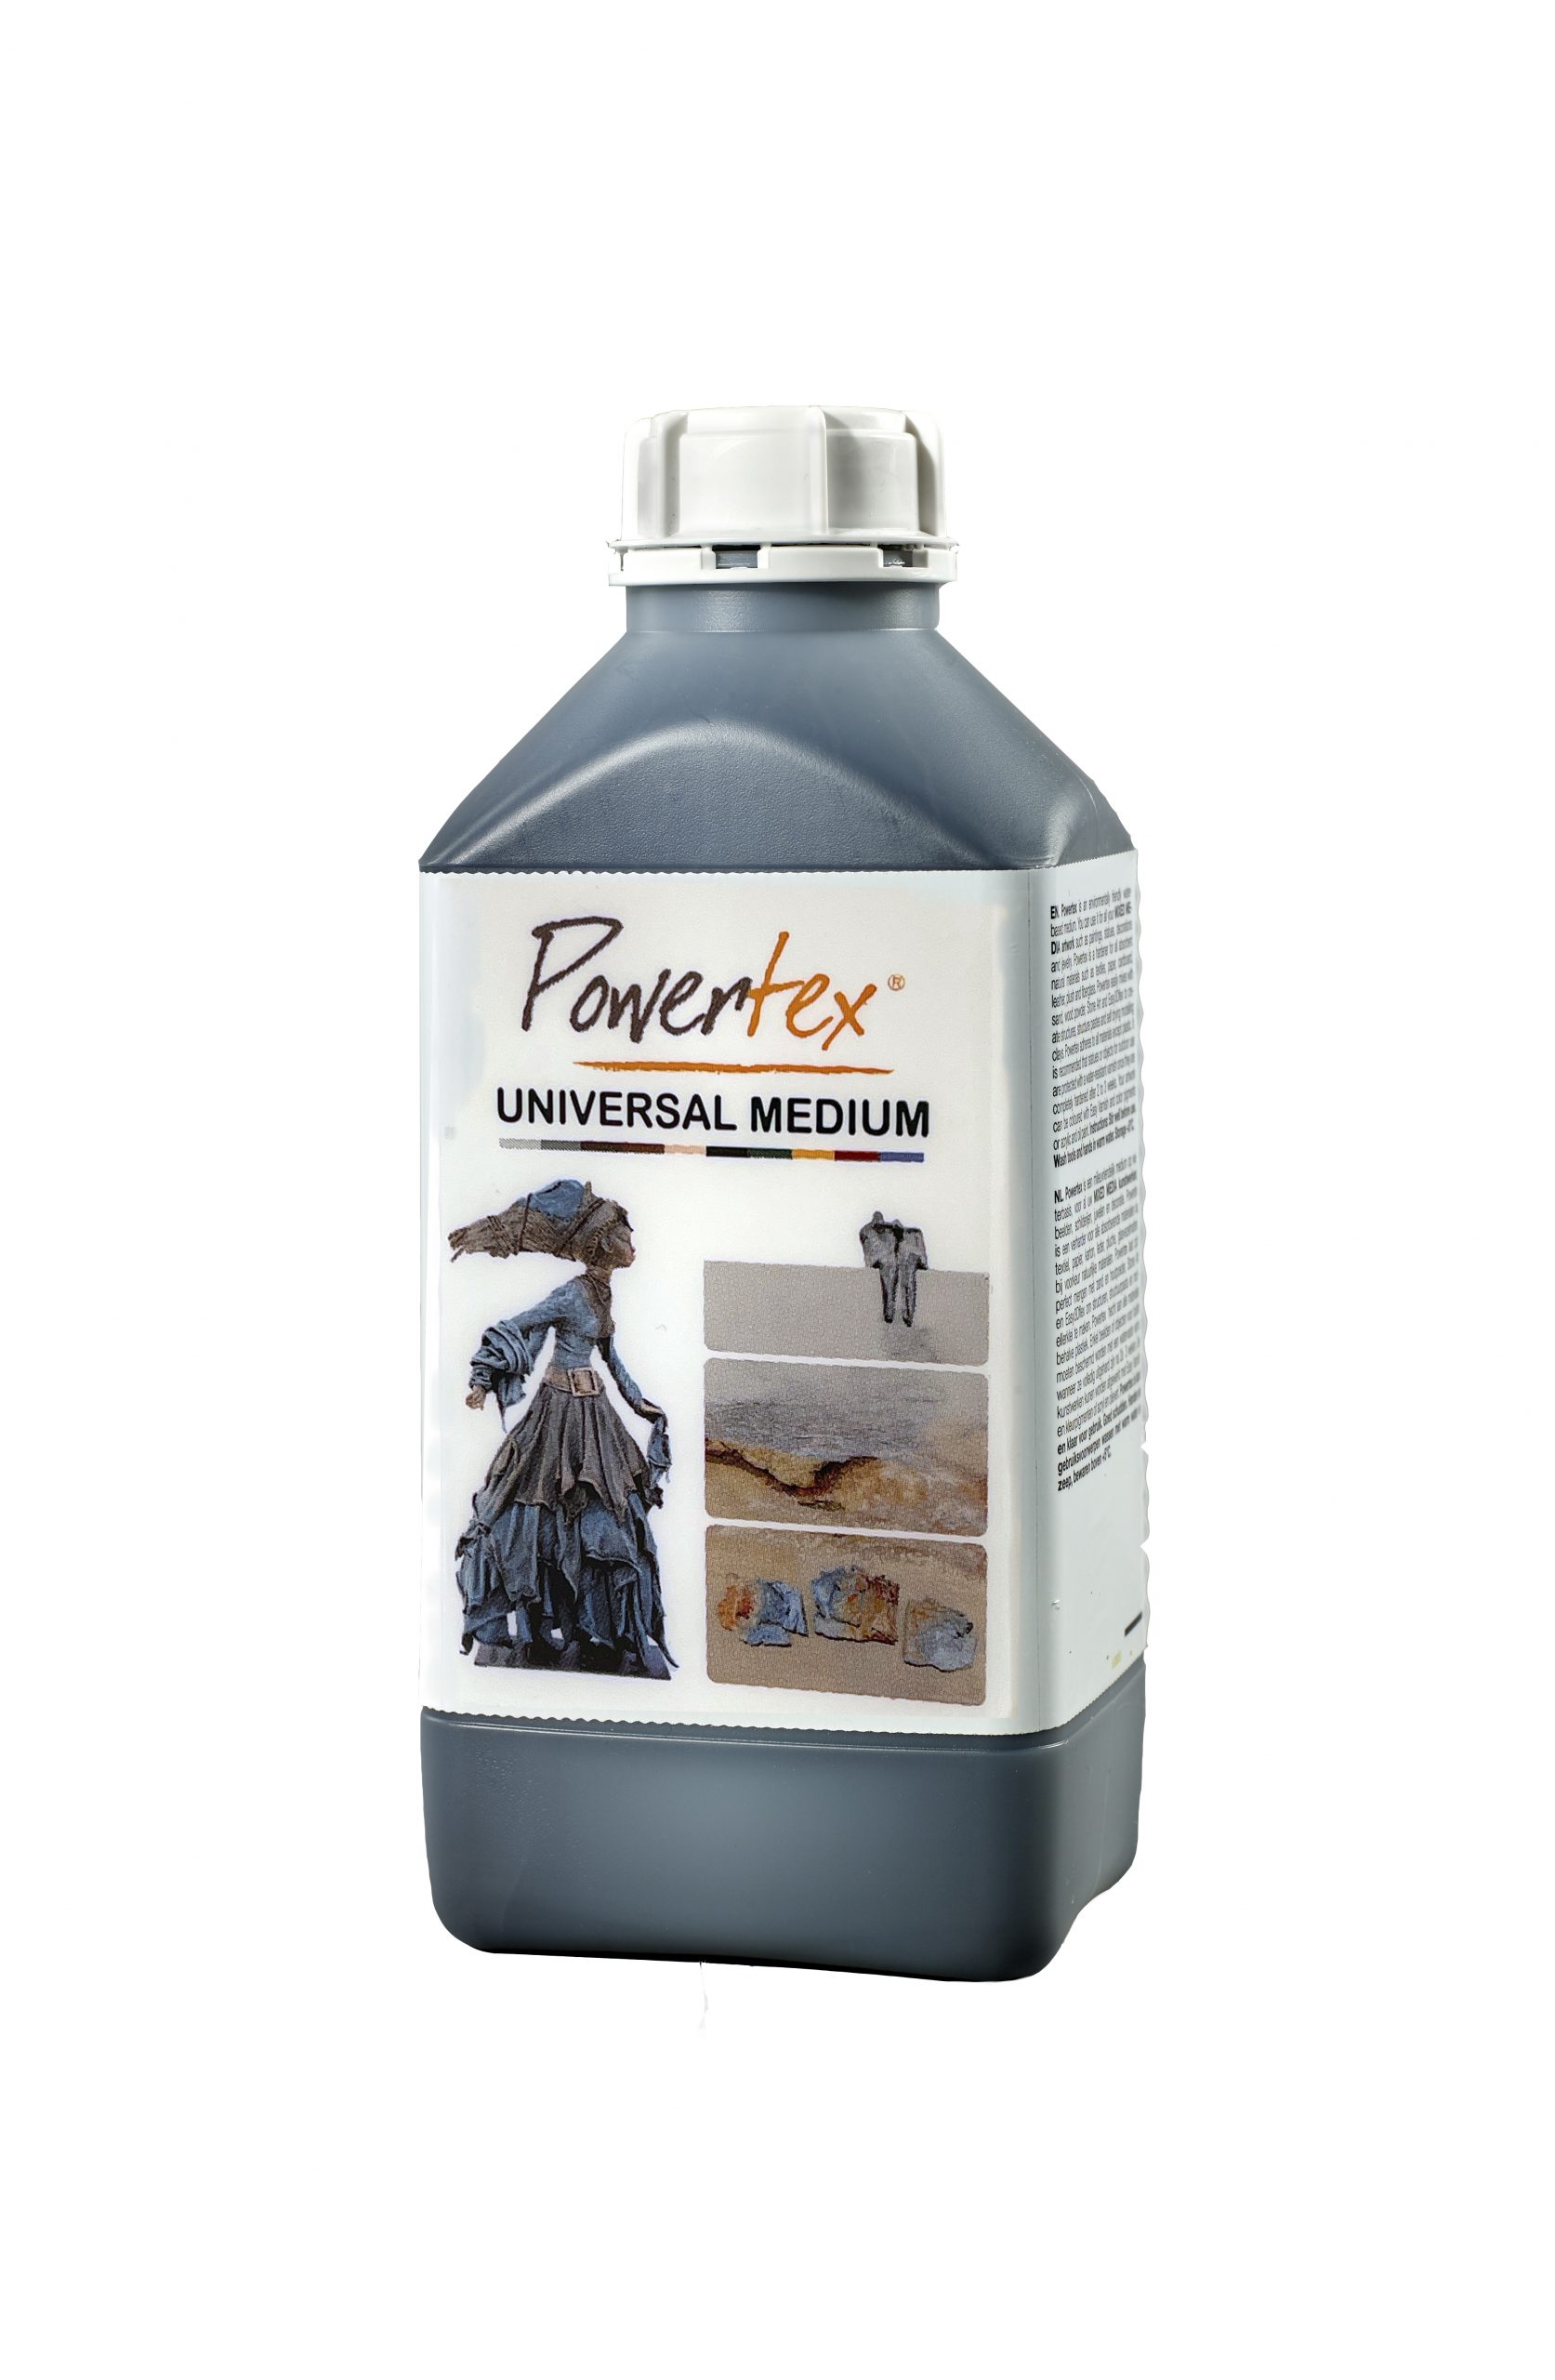 Powertex Universal Medium Transparent 500gr – Powertex Products USA